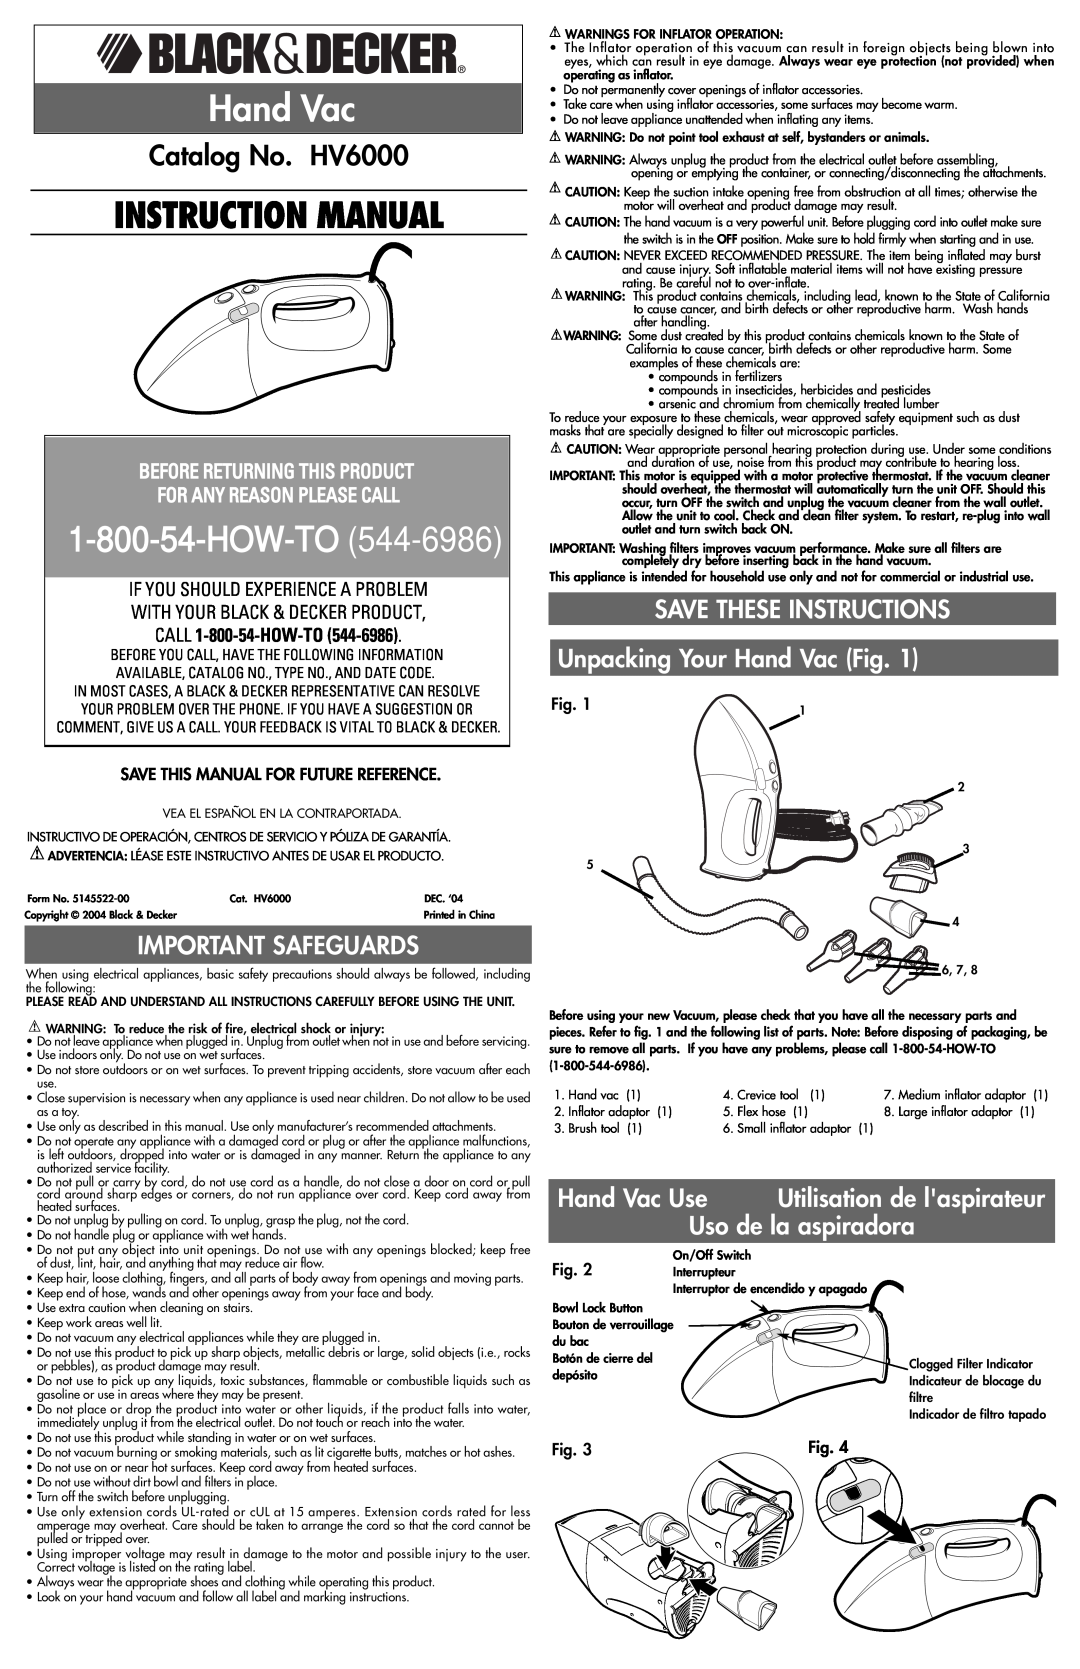 Black & Decker 5145522-00 instruction manual Catalog No. HV6000, Important Safeguards, Hand Vac Use, HOW-TO 544 